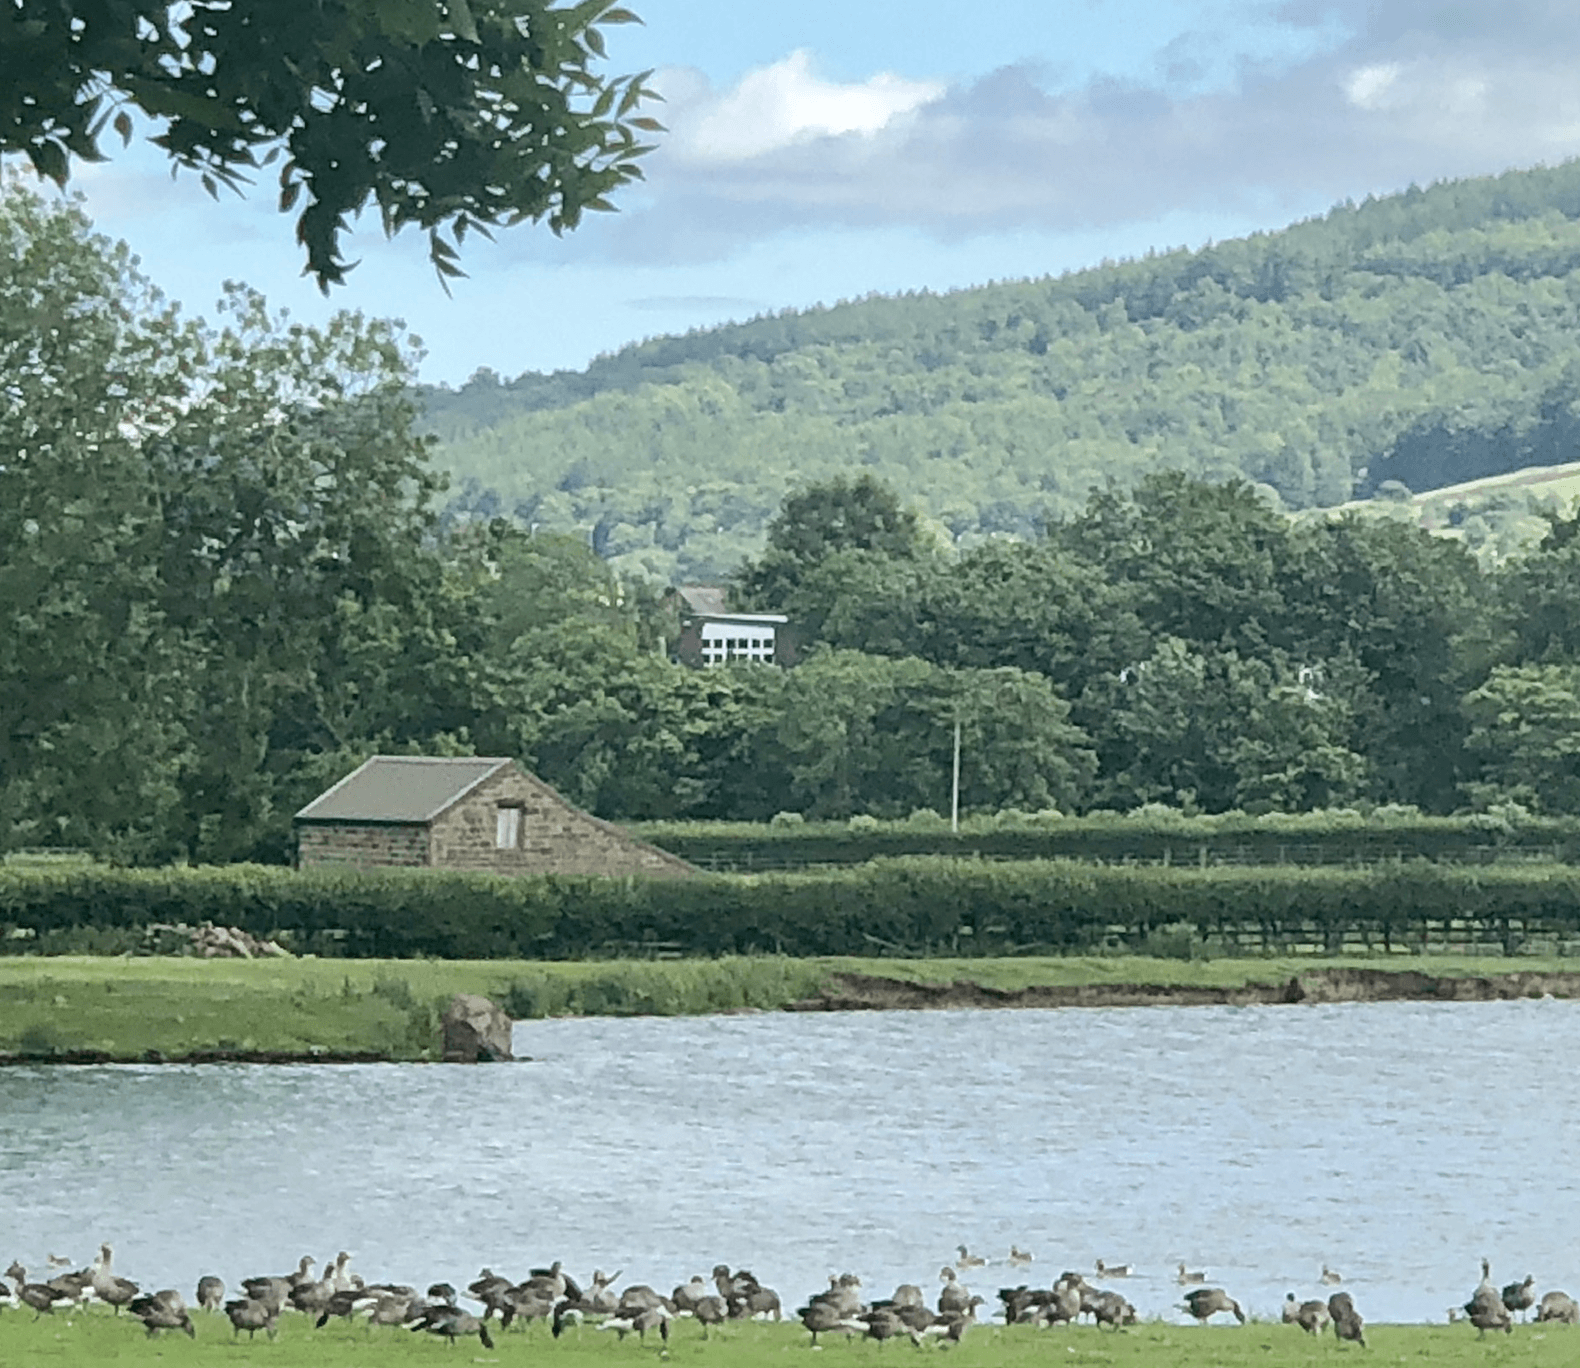 lake and geese